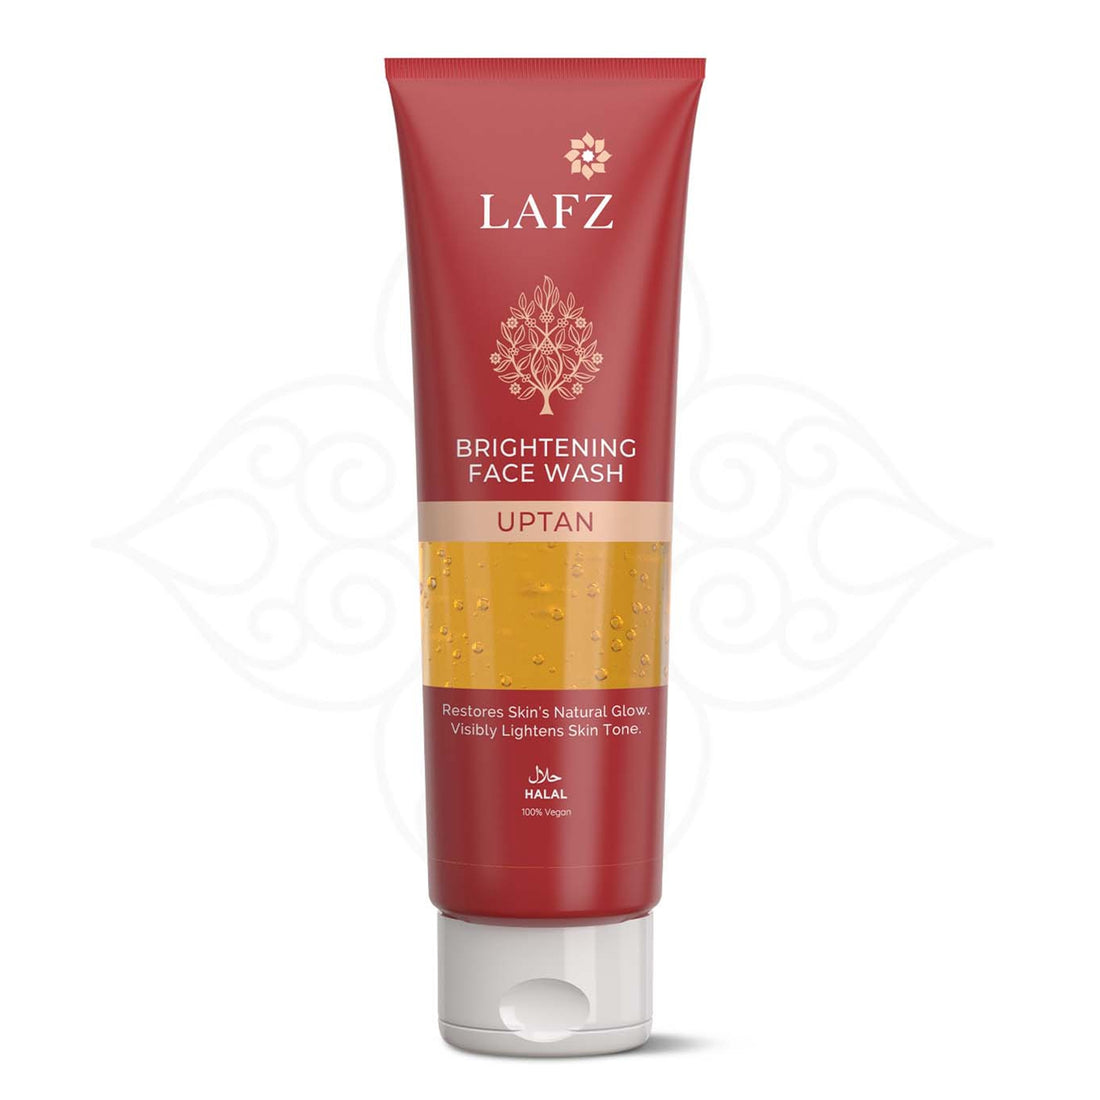 Lafz Uptan Brightening Face Wash (75ml) - Tube Pack of 3